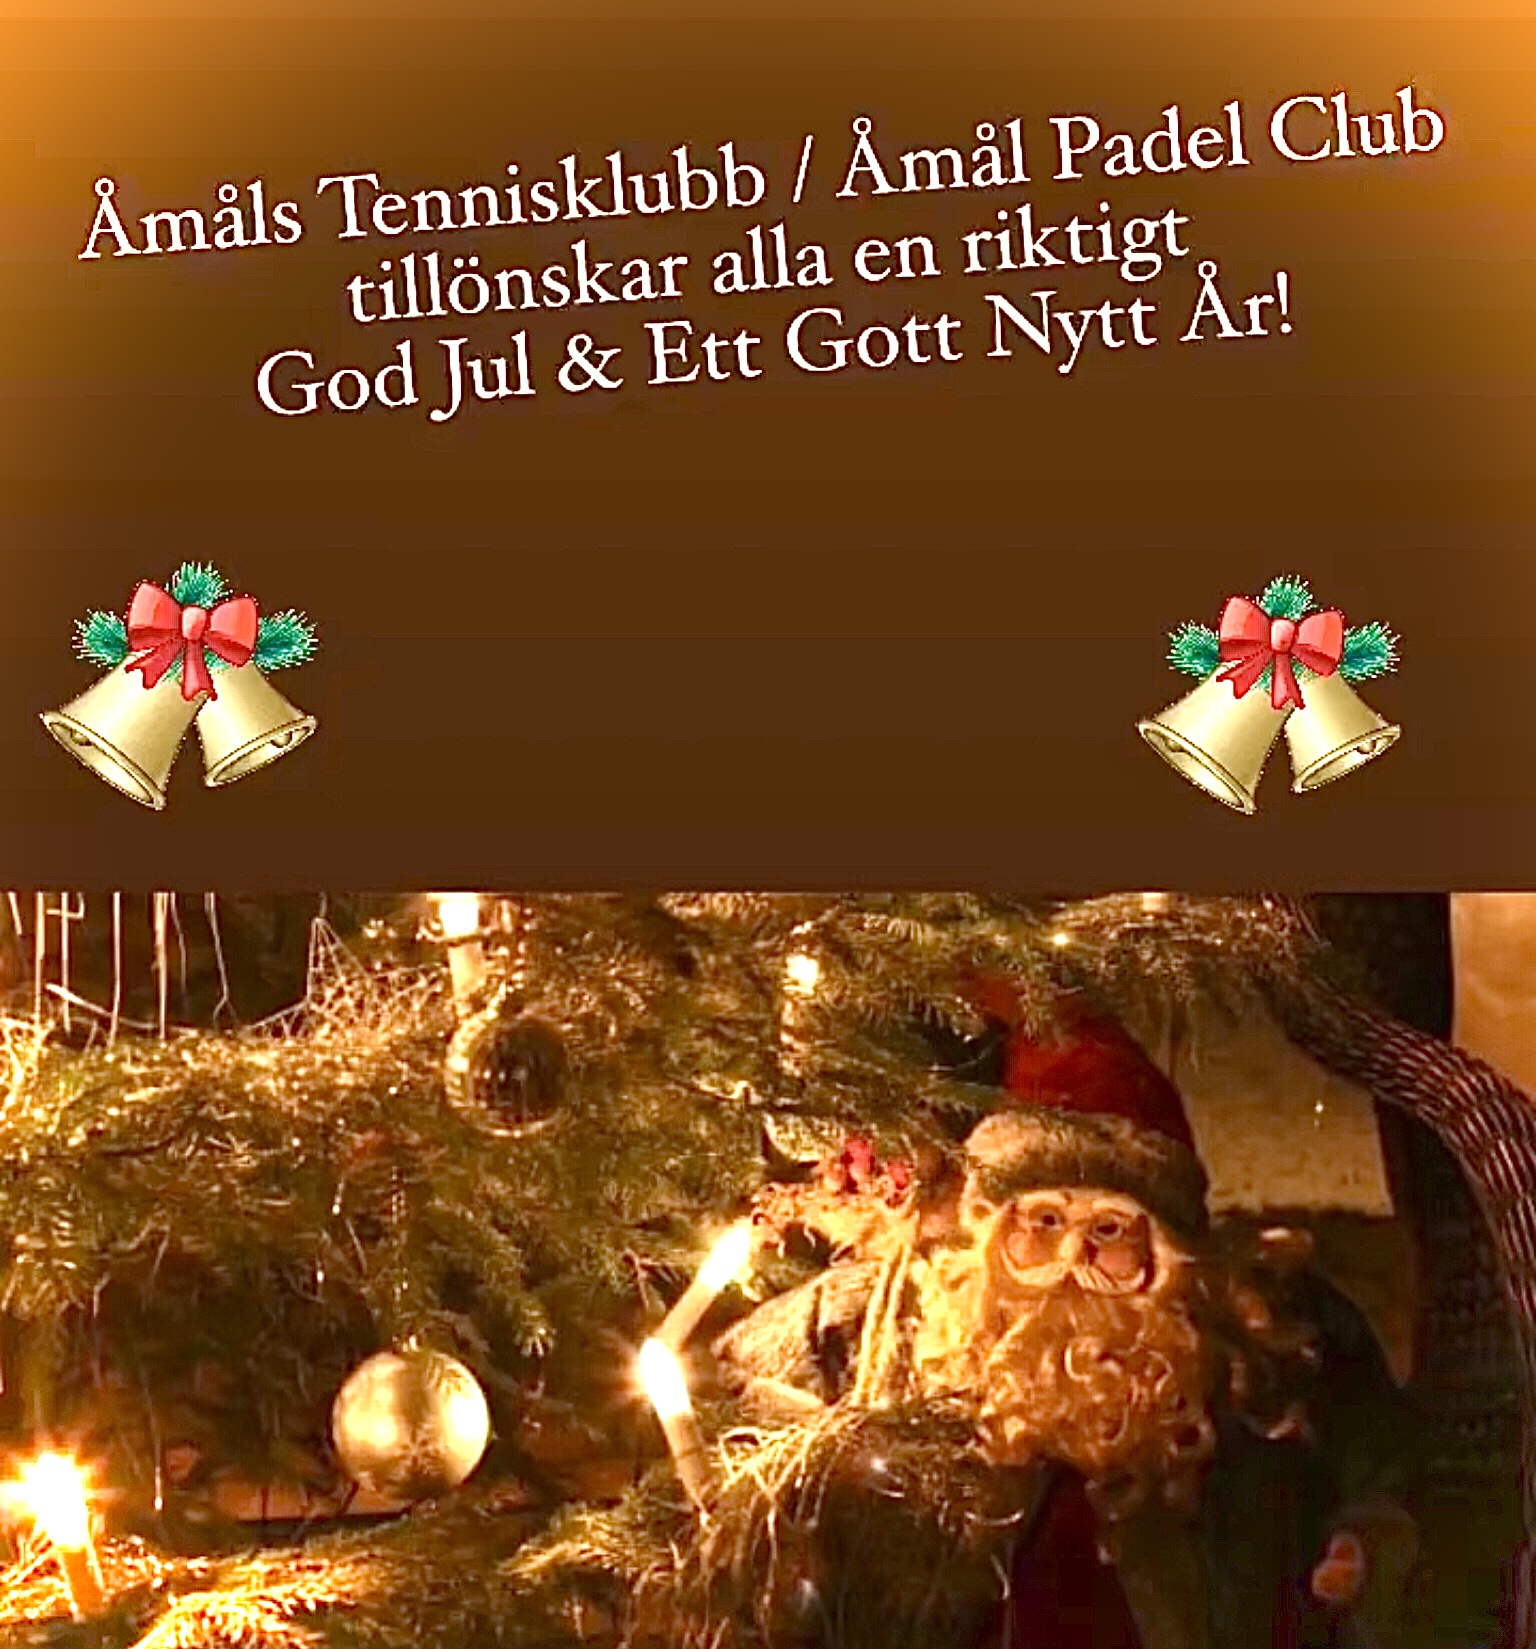 God Jul & Ett Gott Nytt År!